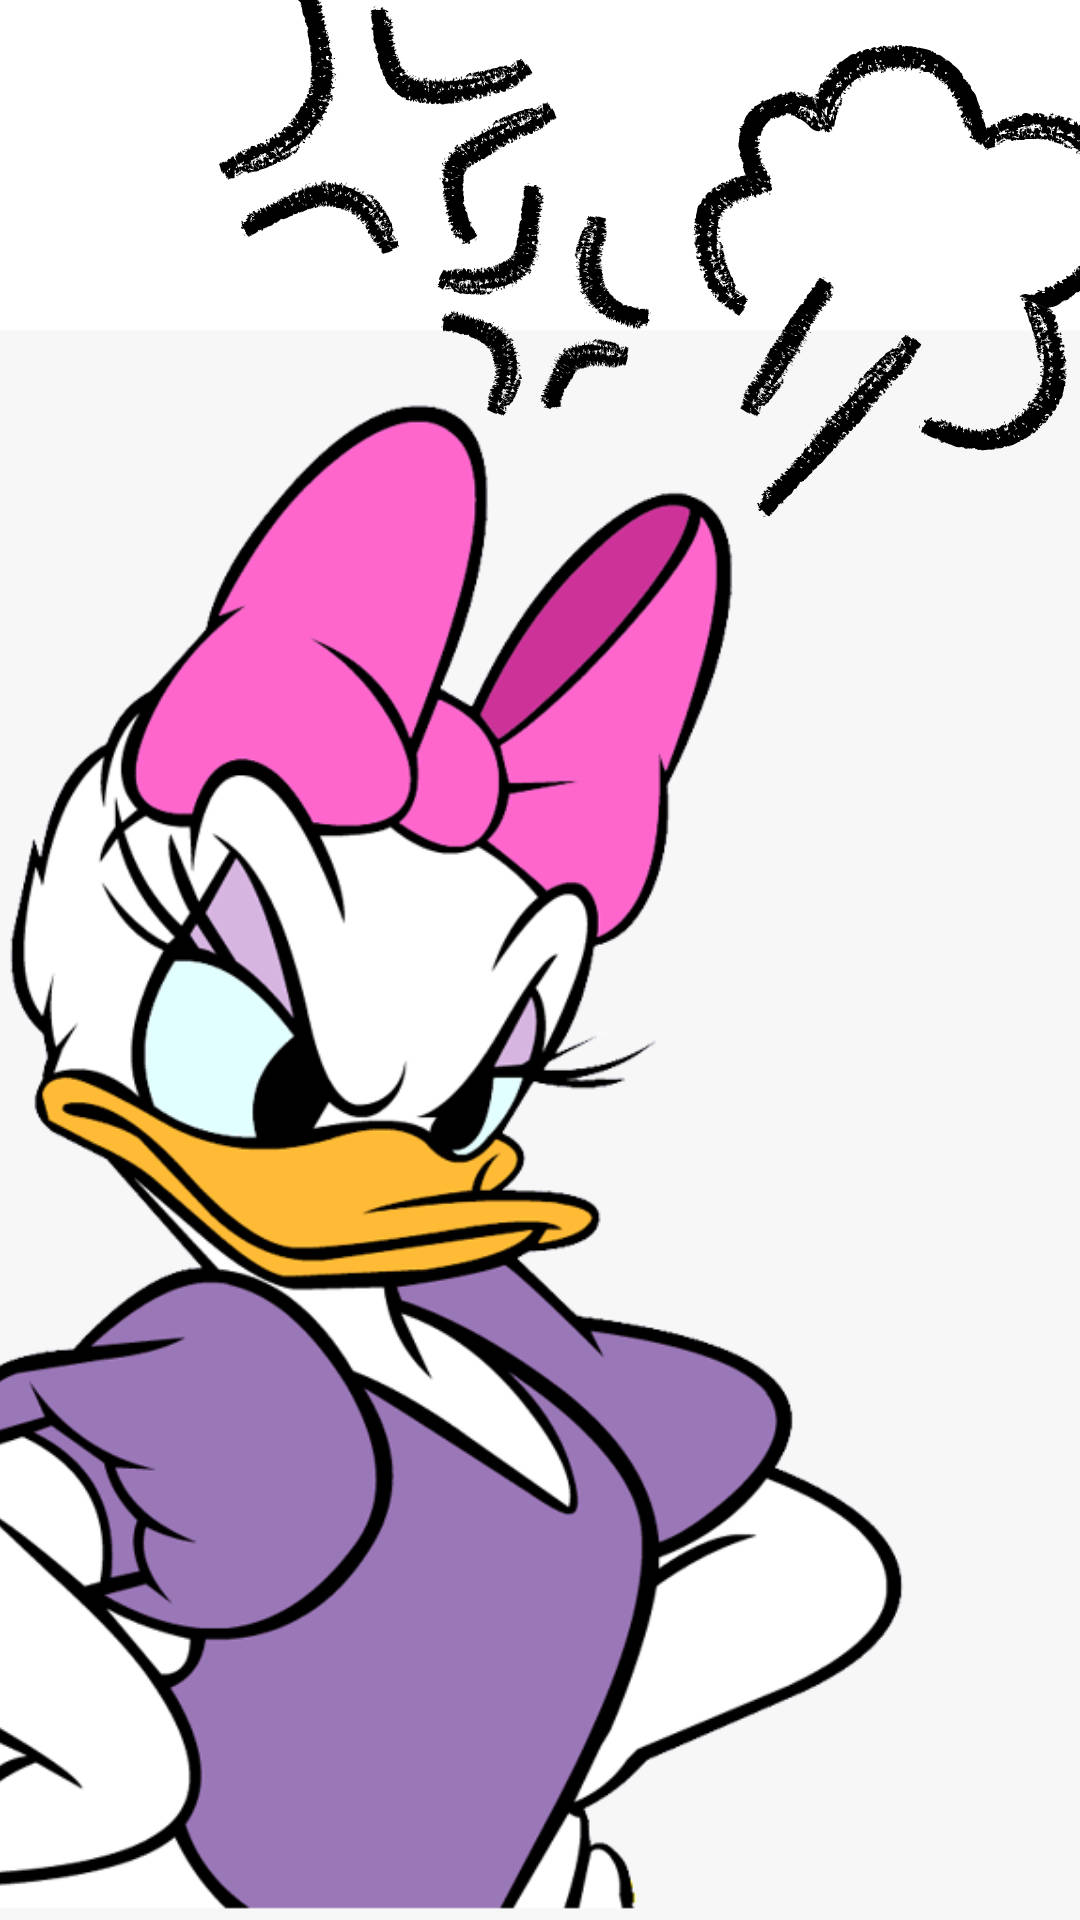 Vred Daisy Duck fylder skærmen med sjove farverige illustrationer. Wallpaper